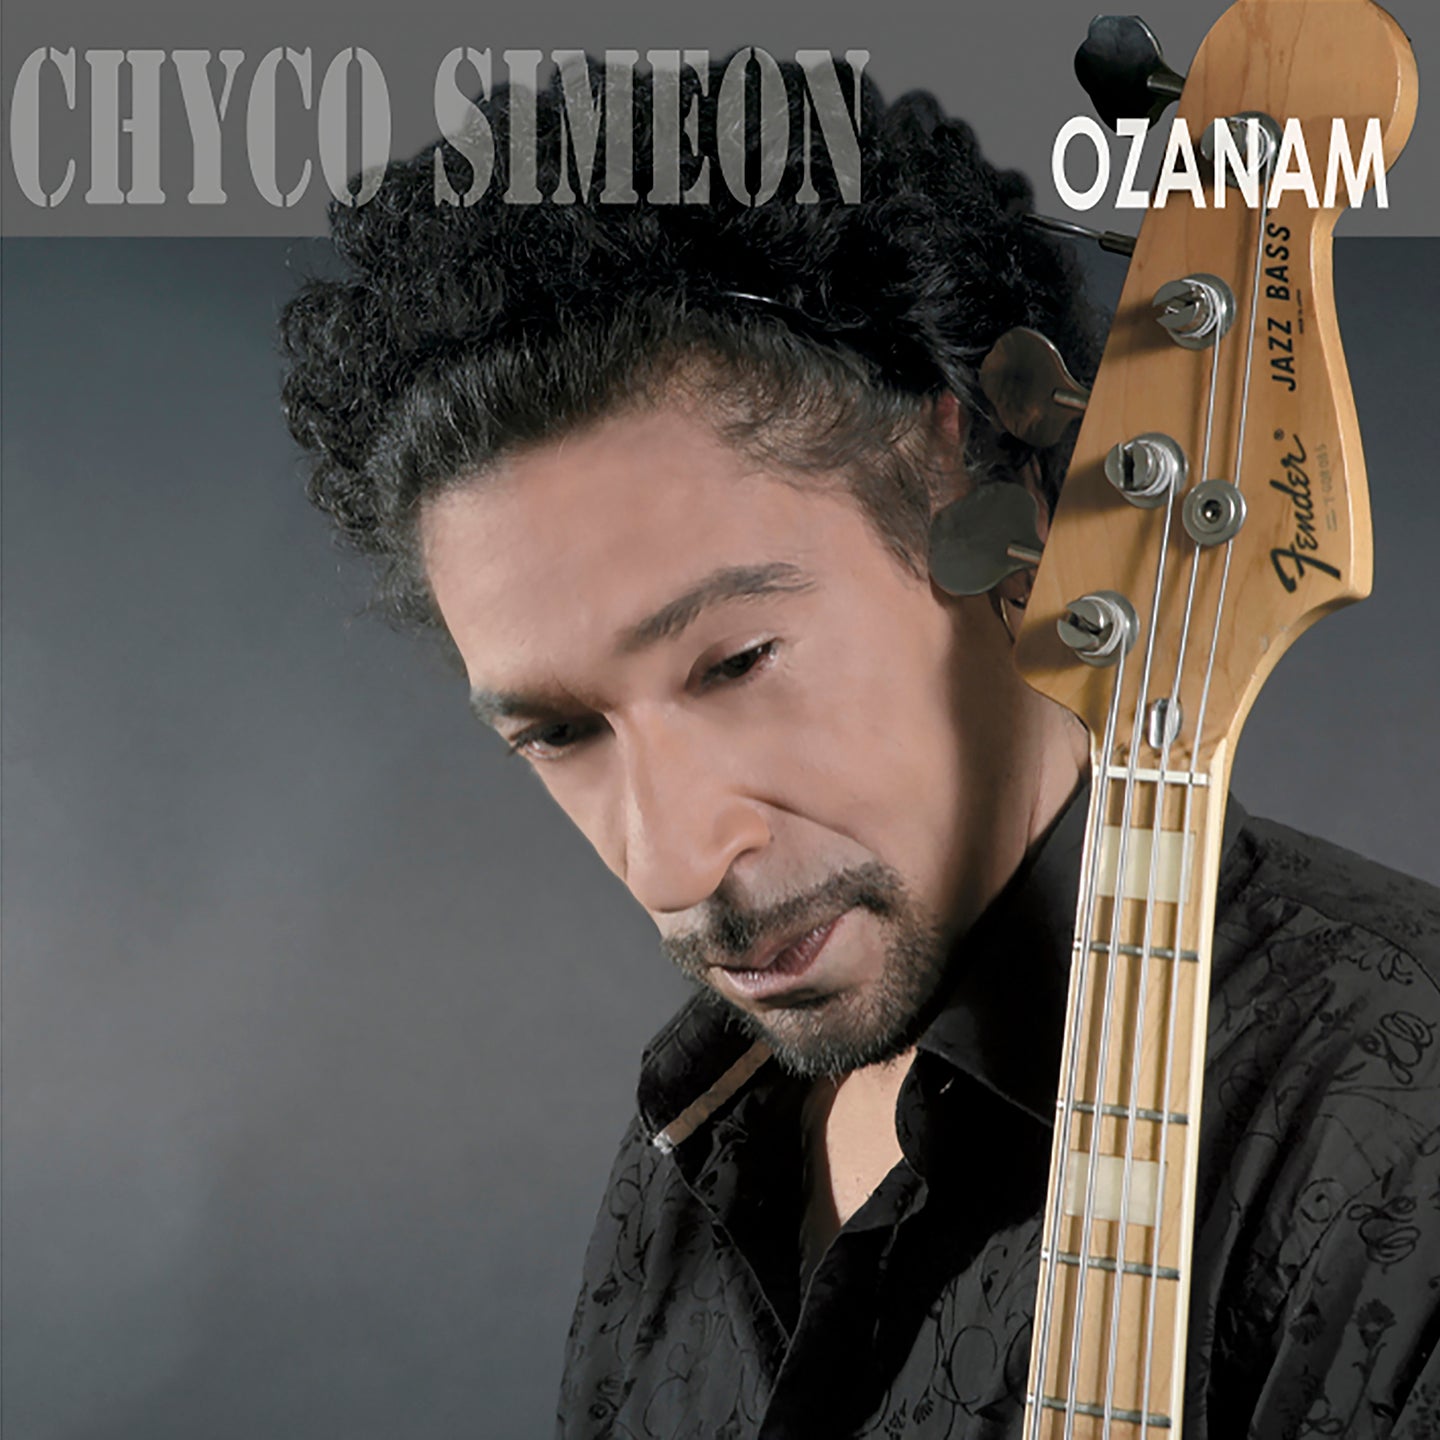 Chyco Siméon - Ozanam (CD)